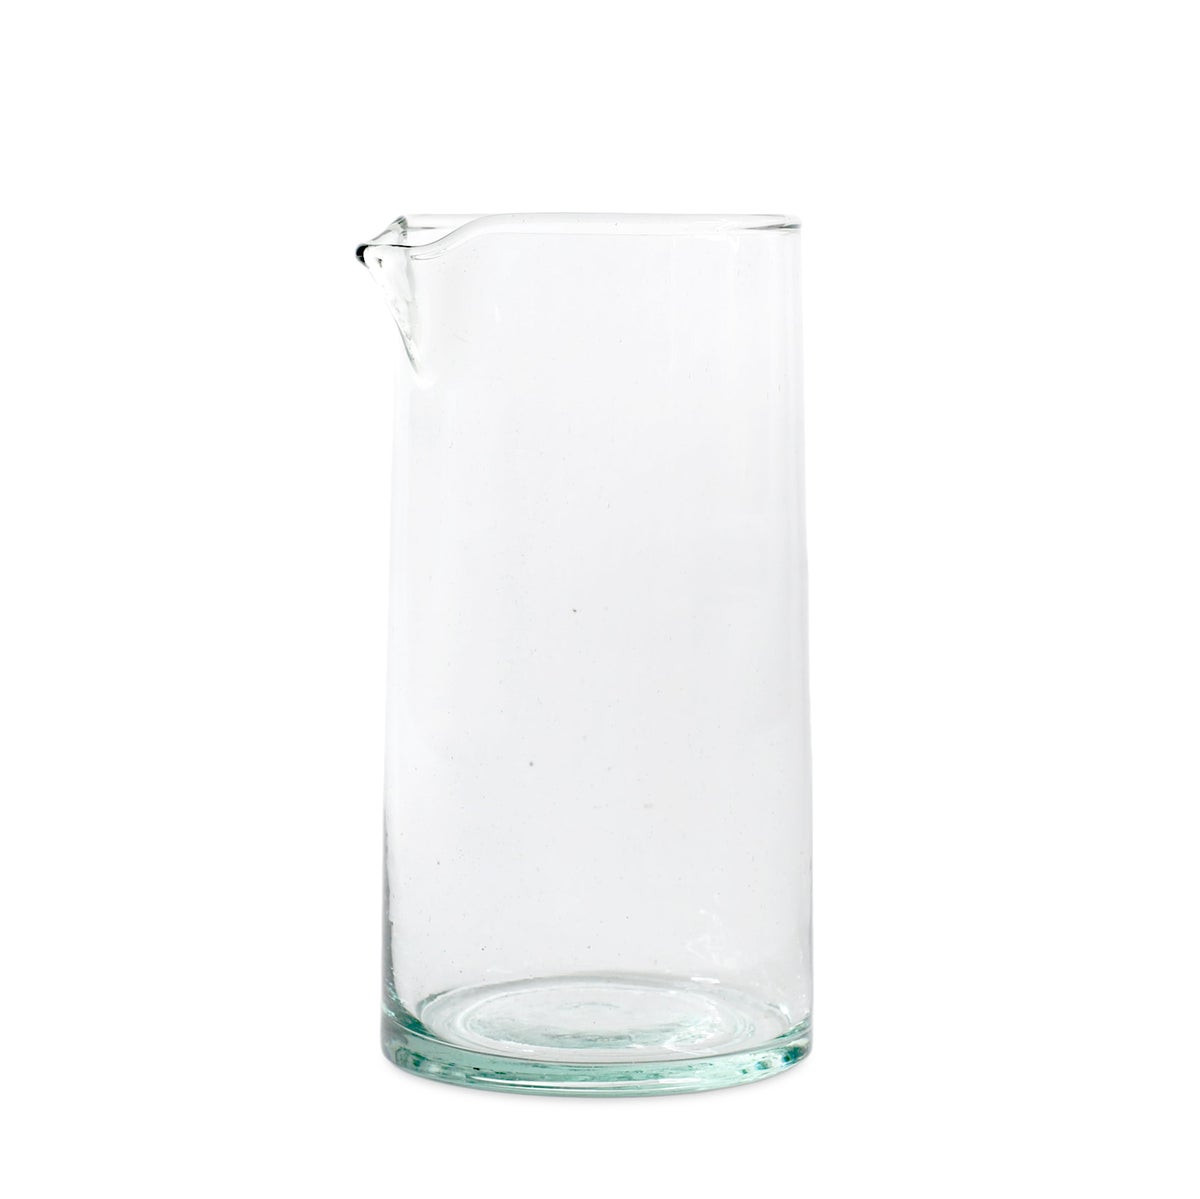 HAWKINS NEW YORK - RECLAIMED GLASS - PITCHER